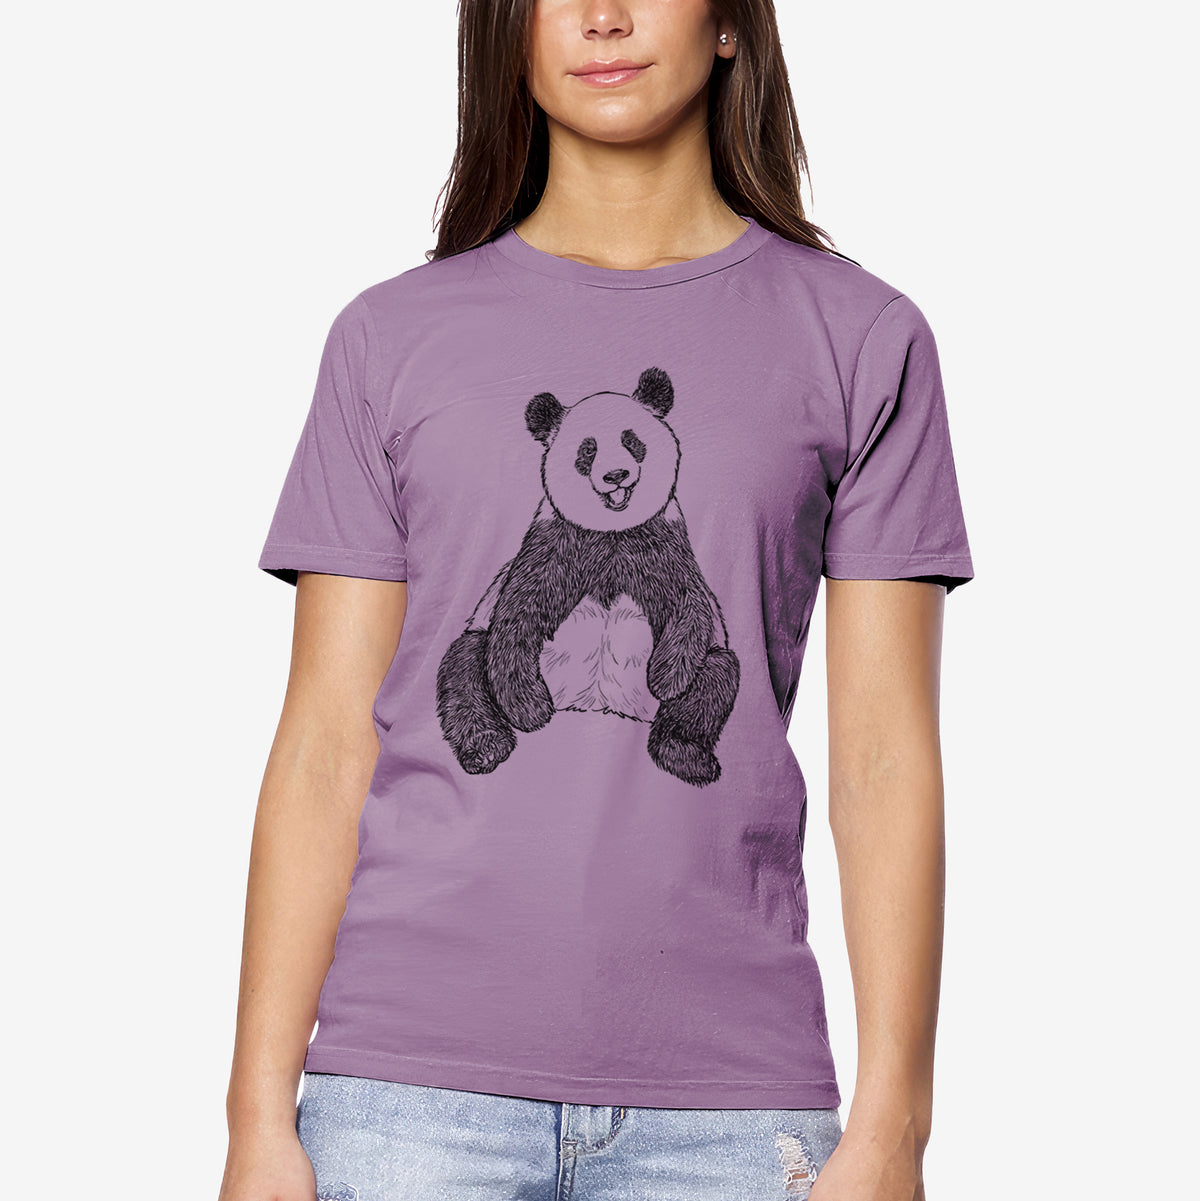 Ailuropoda melanoleuca - Giant Panda Sitting - Unisex Crewneck - Made in USA - 100% Organic Cotton